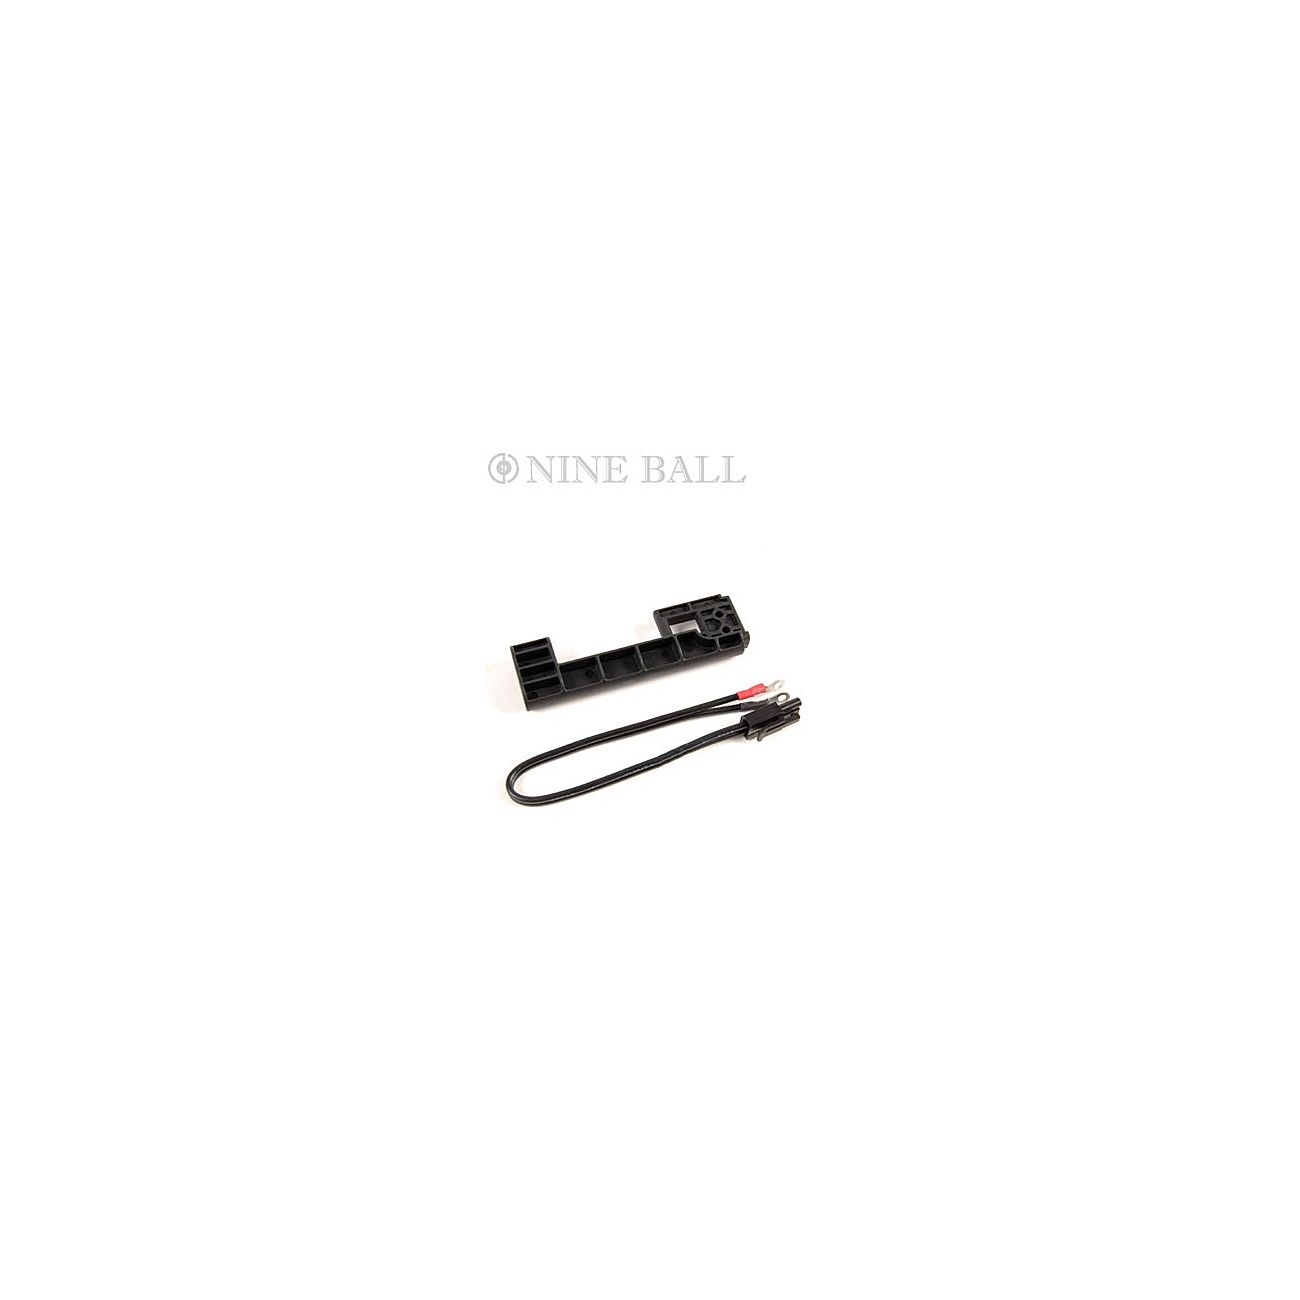 NineBall Akku Adapter Set f. MP7A1 AEG / AEP extern